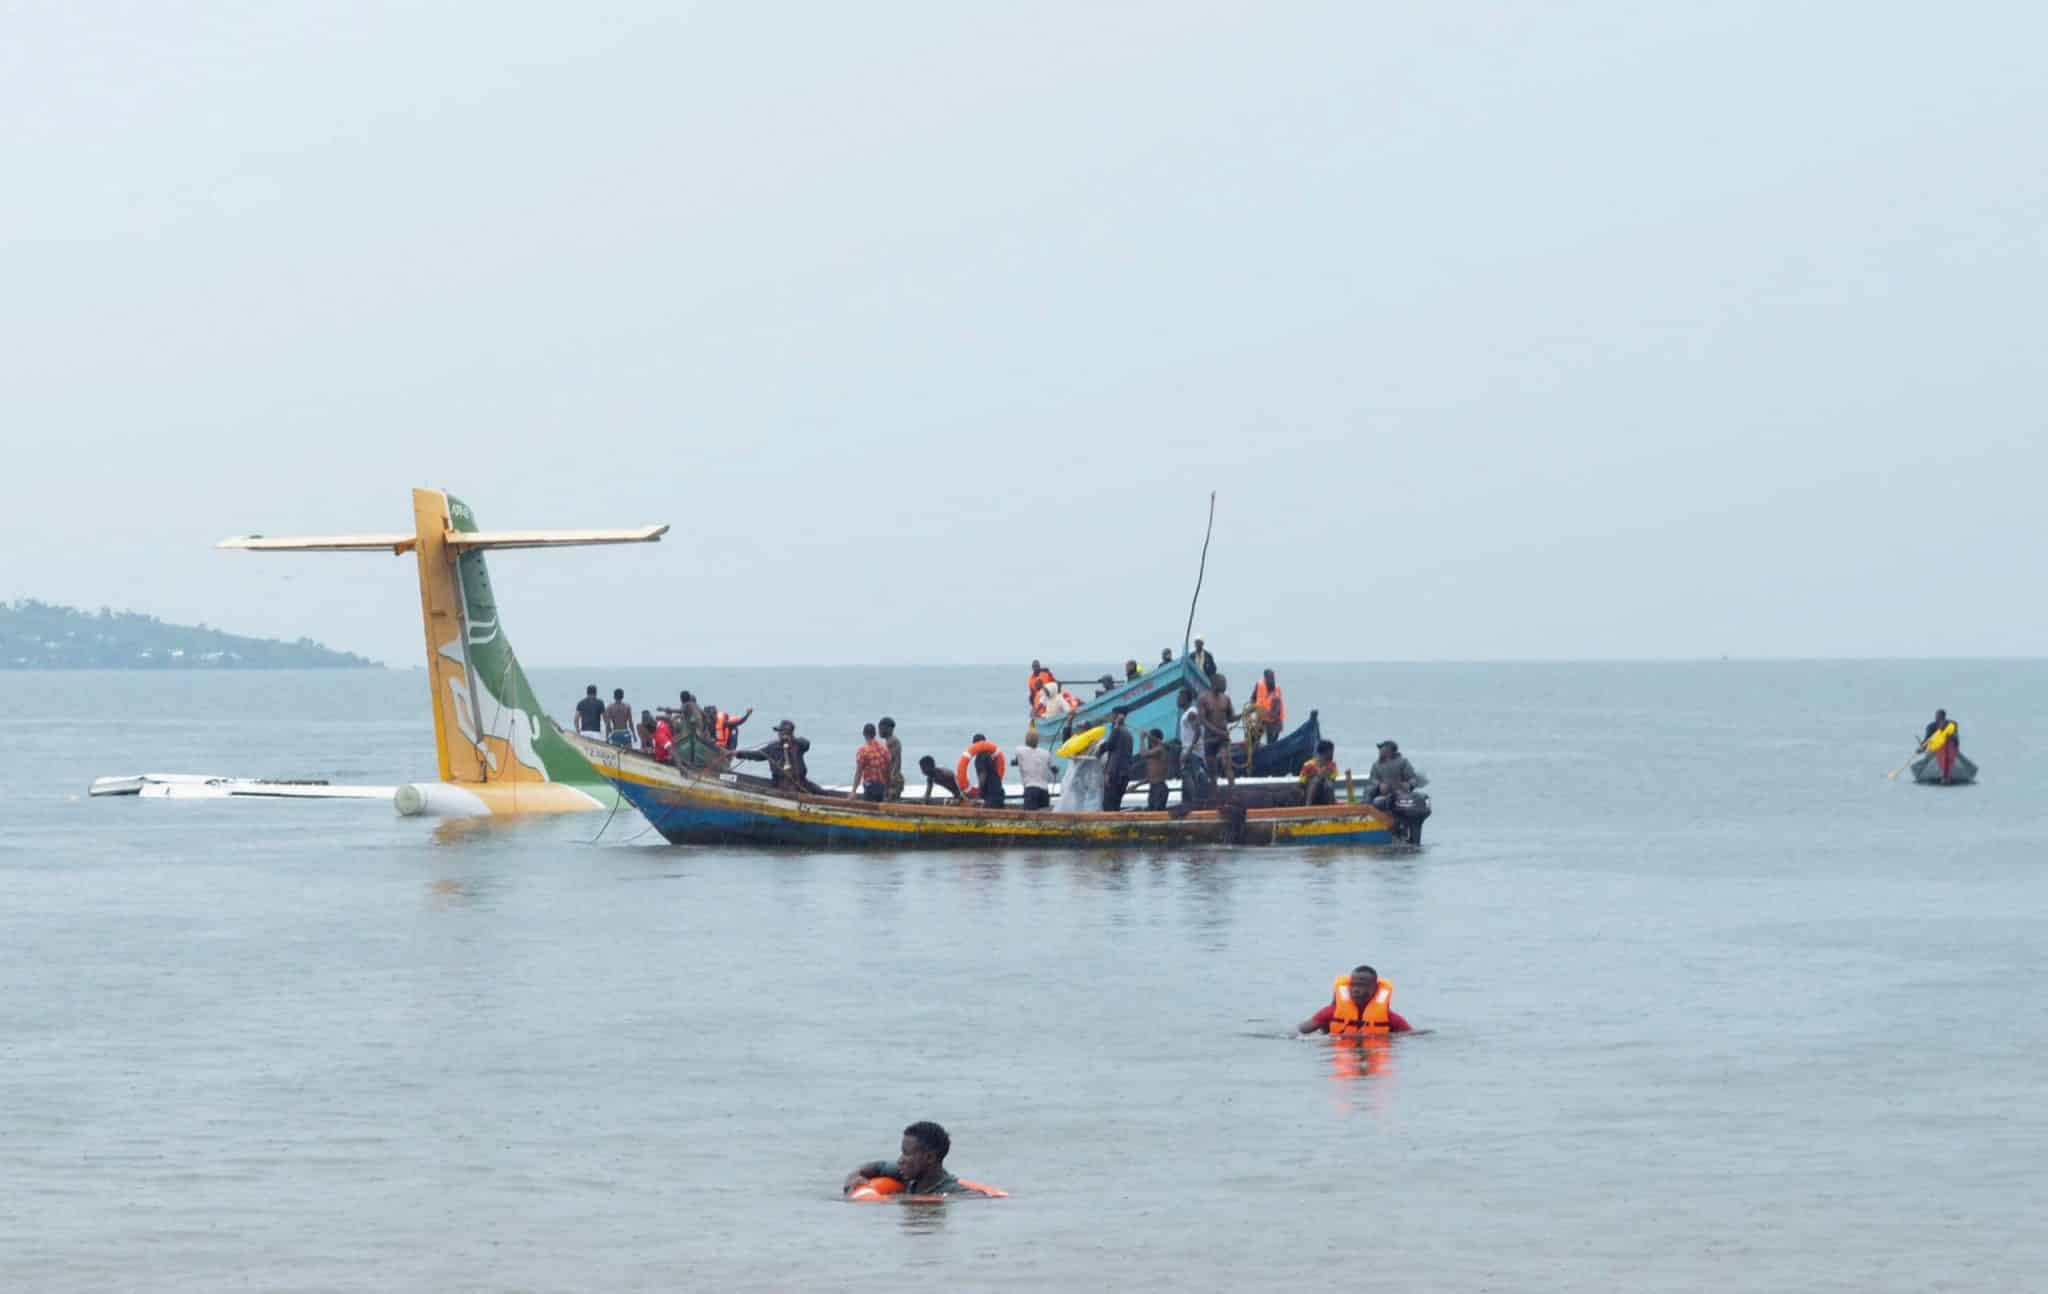 19 dead as passenger plane crashes into Lake Victoria in Tanzania